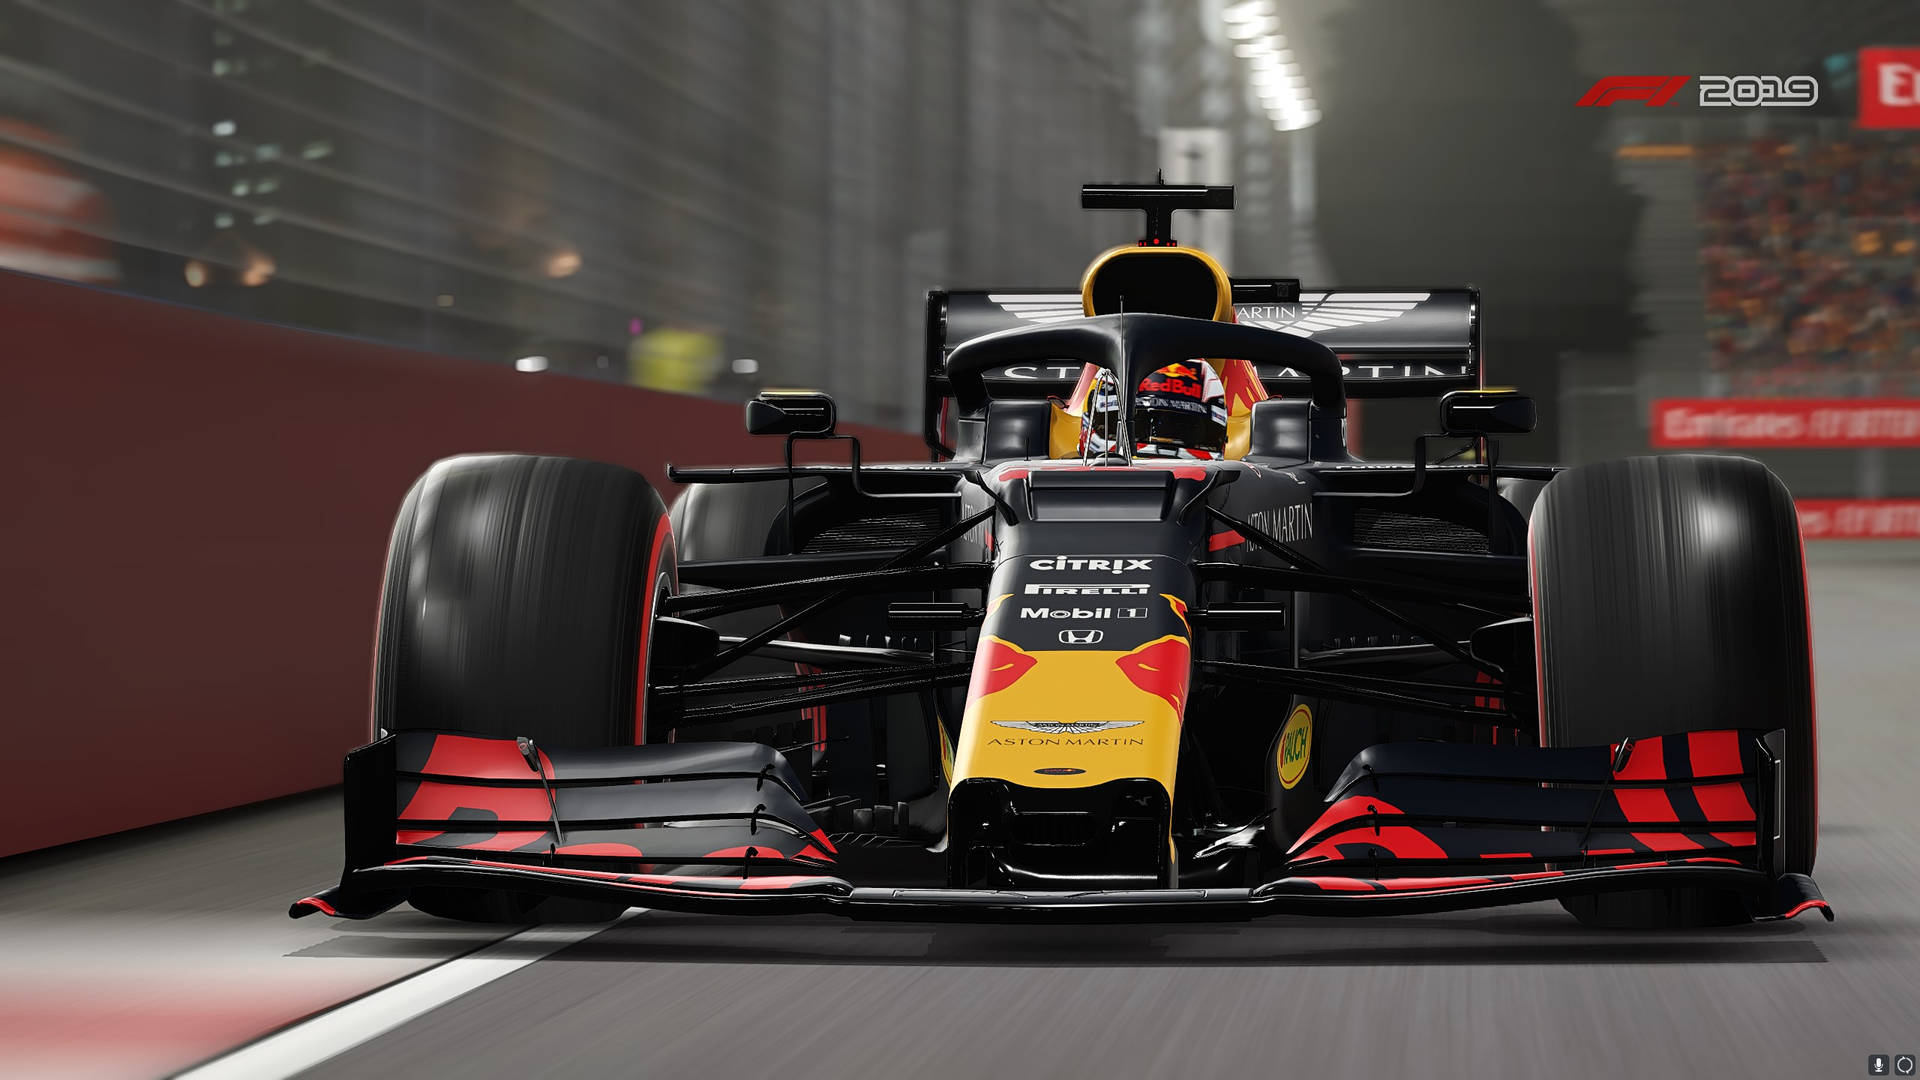 F1 2019 Car Up-close Background